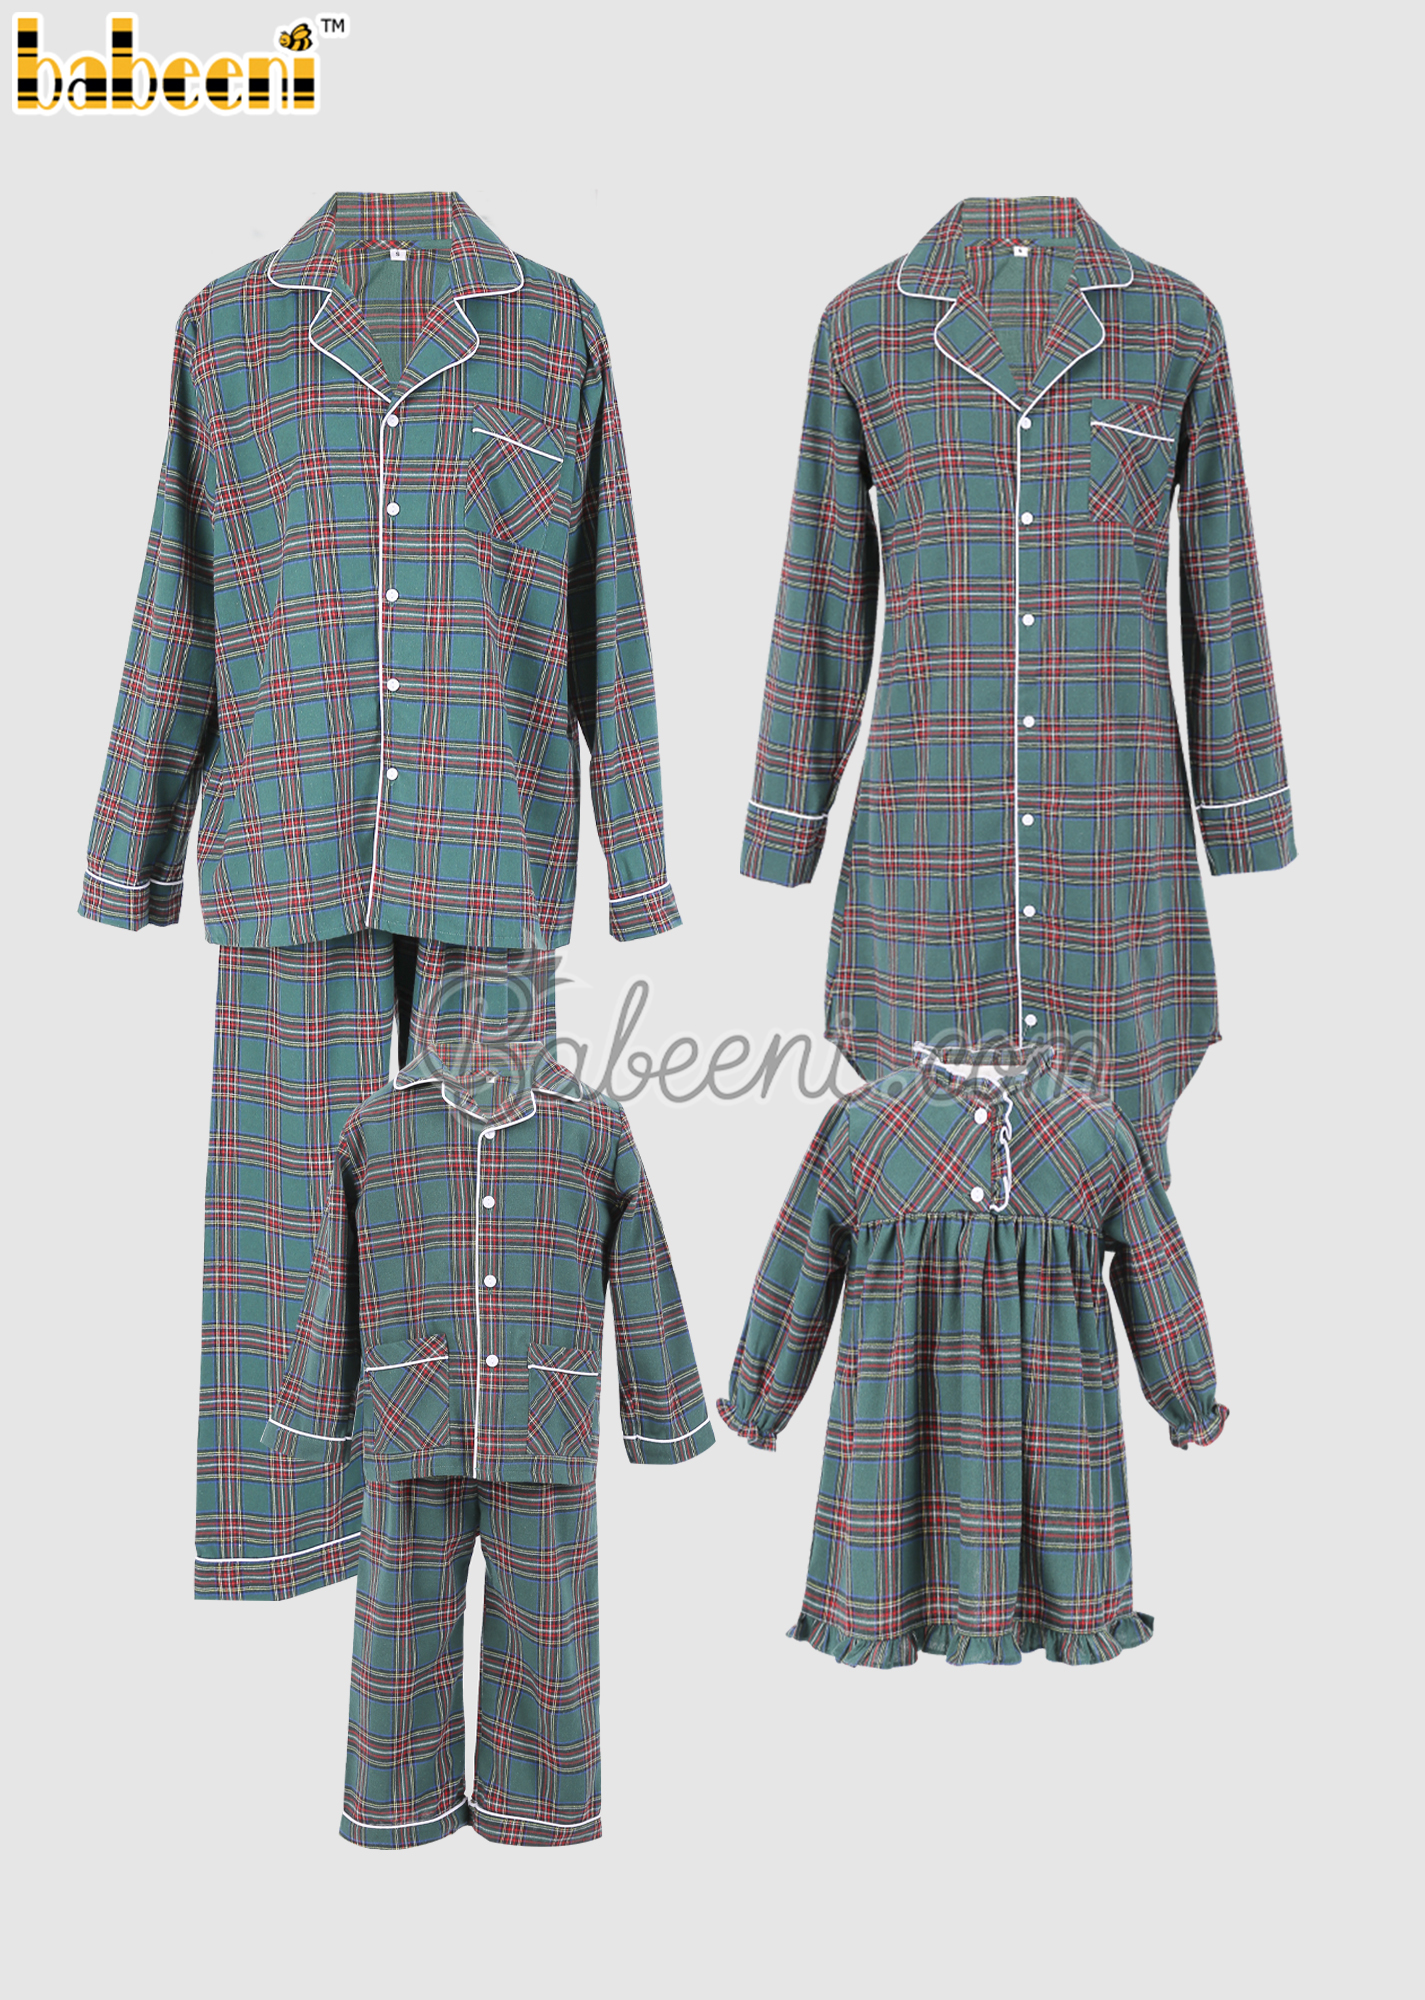 Cozy green flannel family pajamas – FS 08